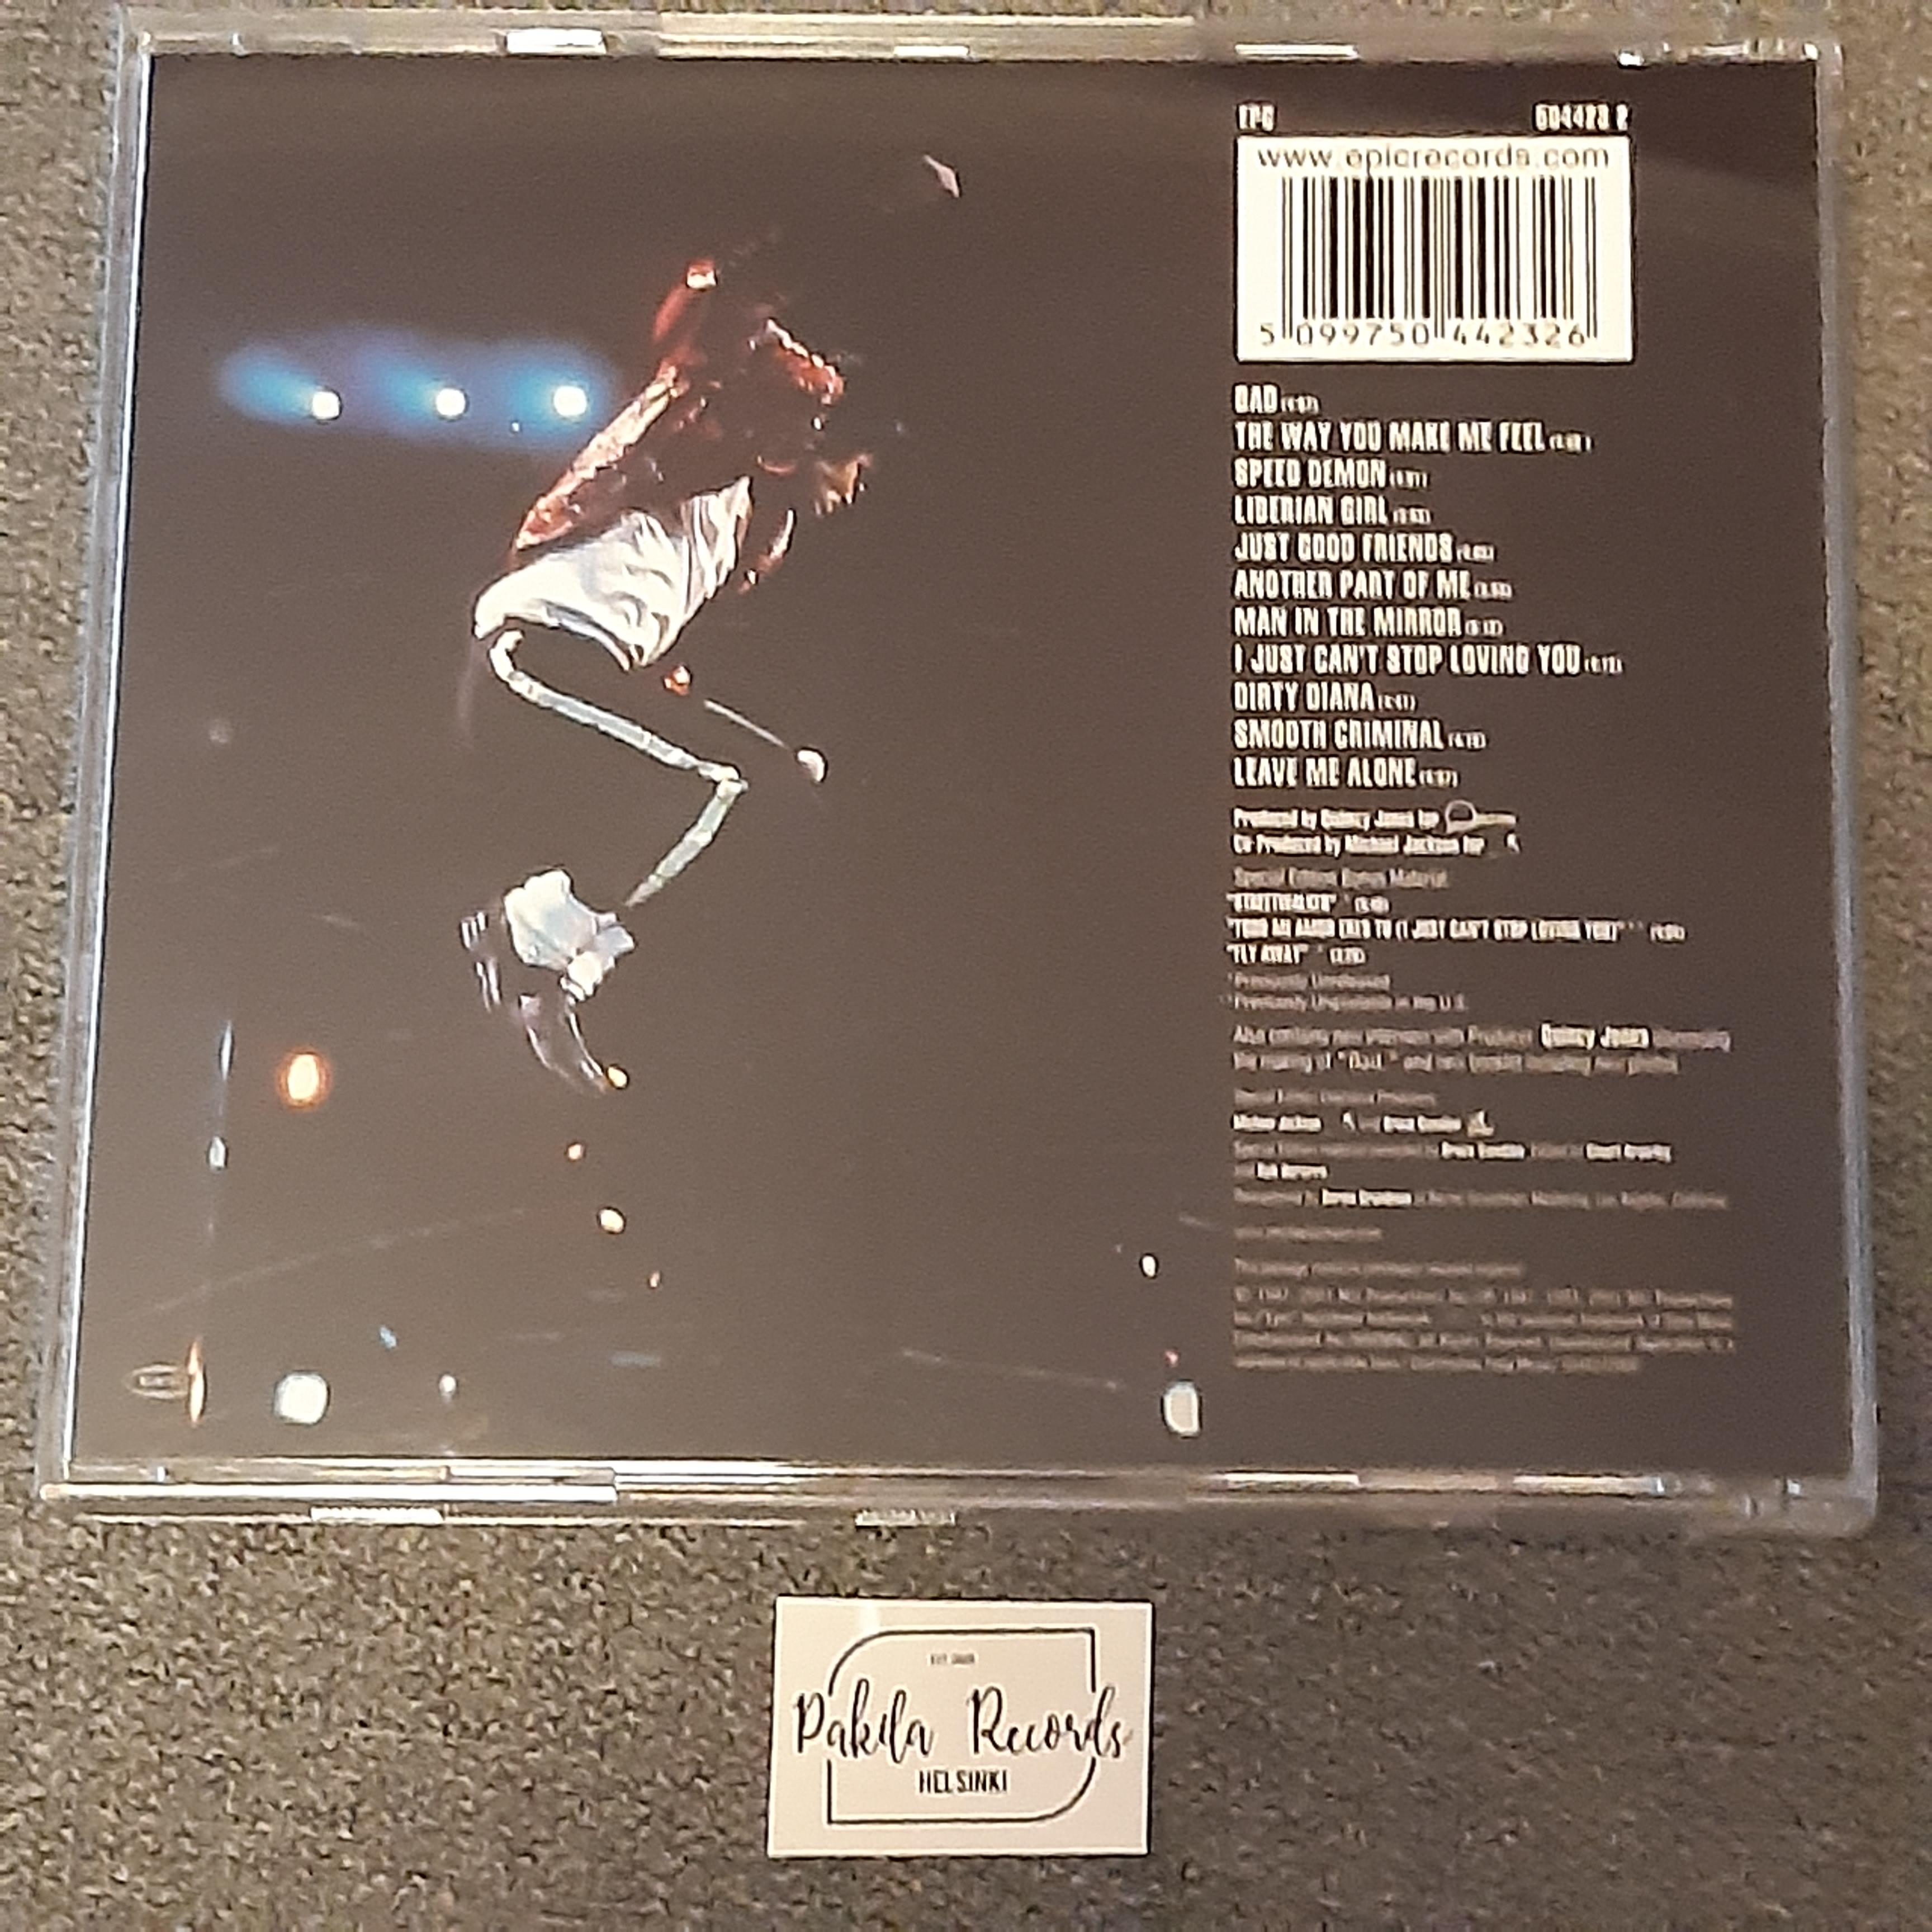 Michael Jackson - Bad, Special Edition - CD (käytetty)